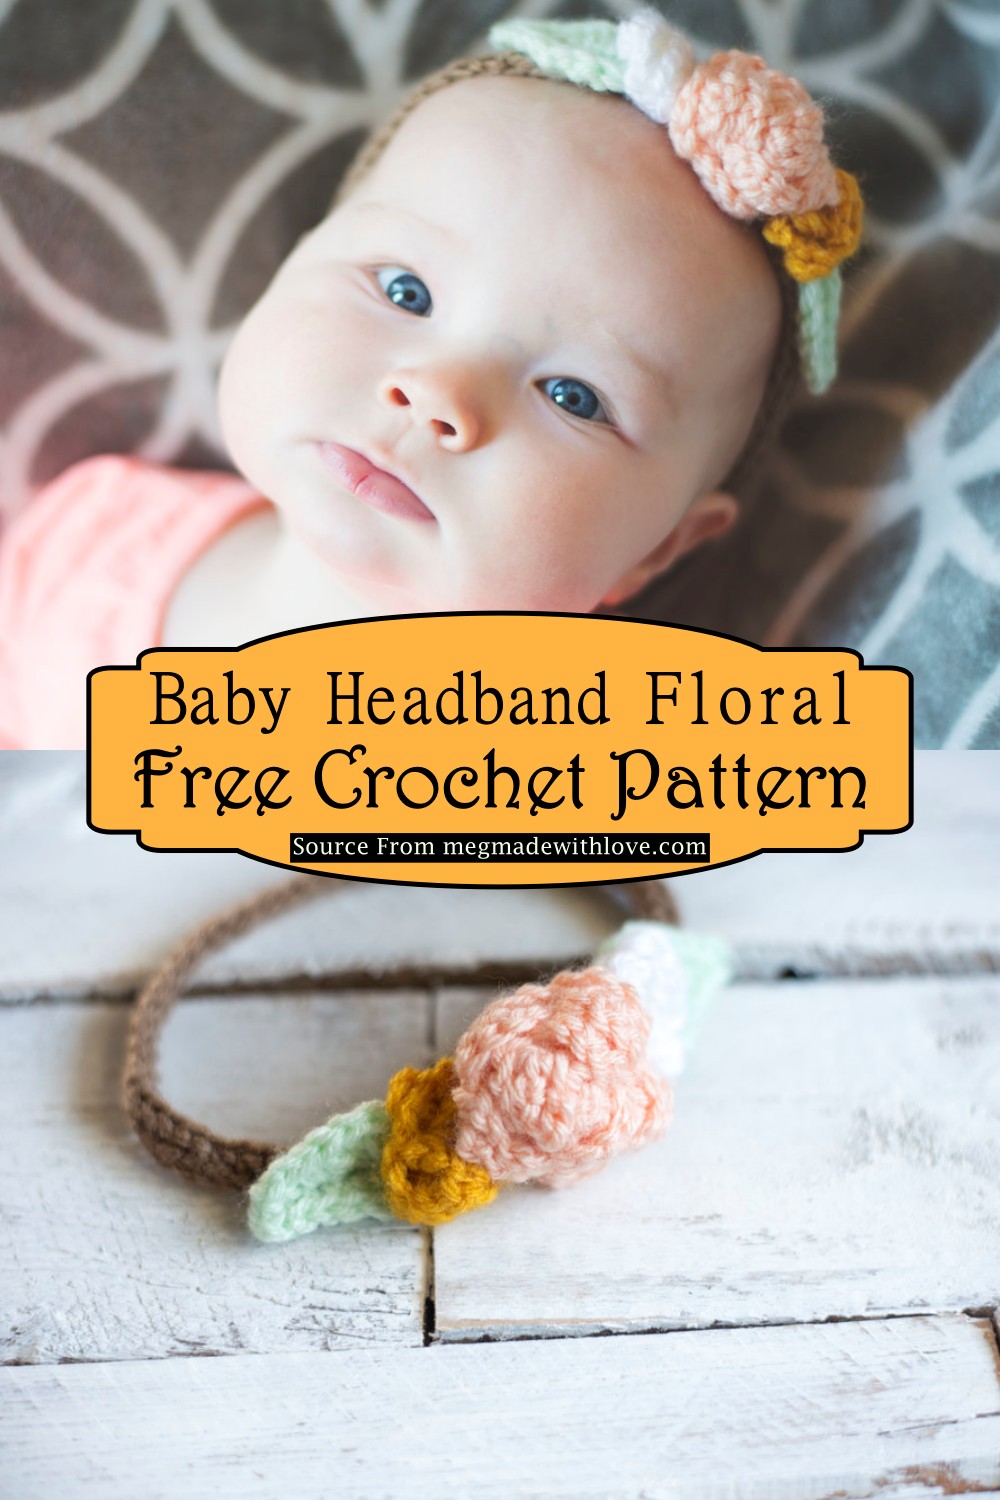 Baby Headband Floral